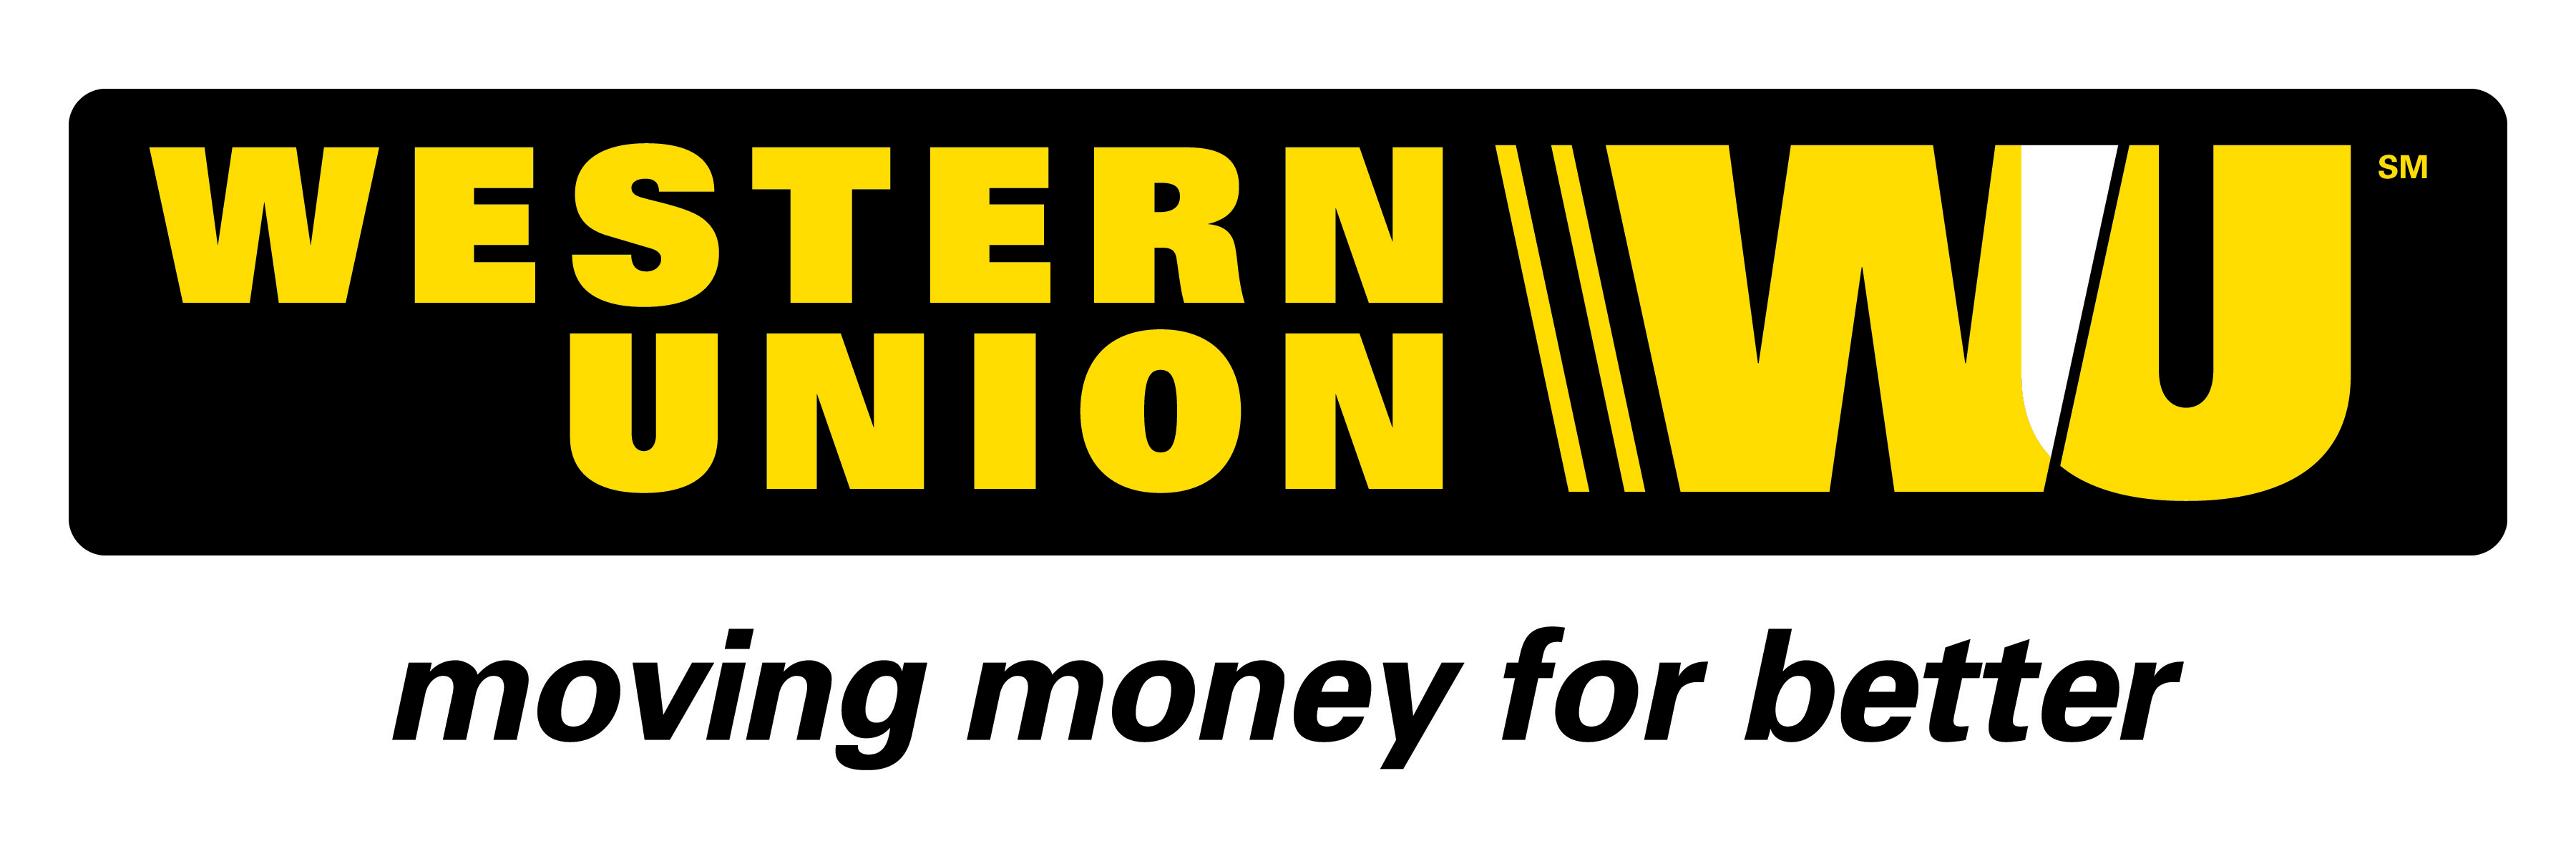 Westernunion Logo - LifeSmarts Supporter: Western Union | LifeSmarts